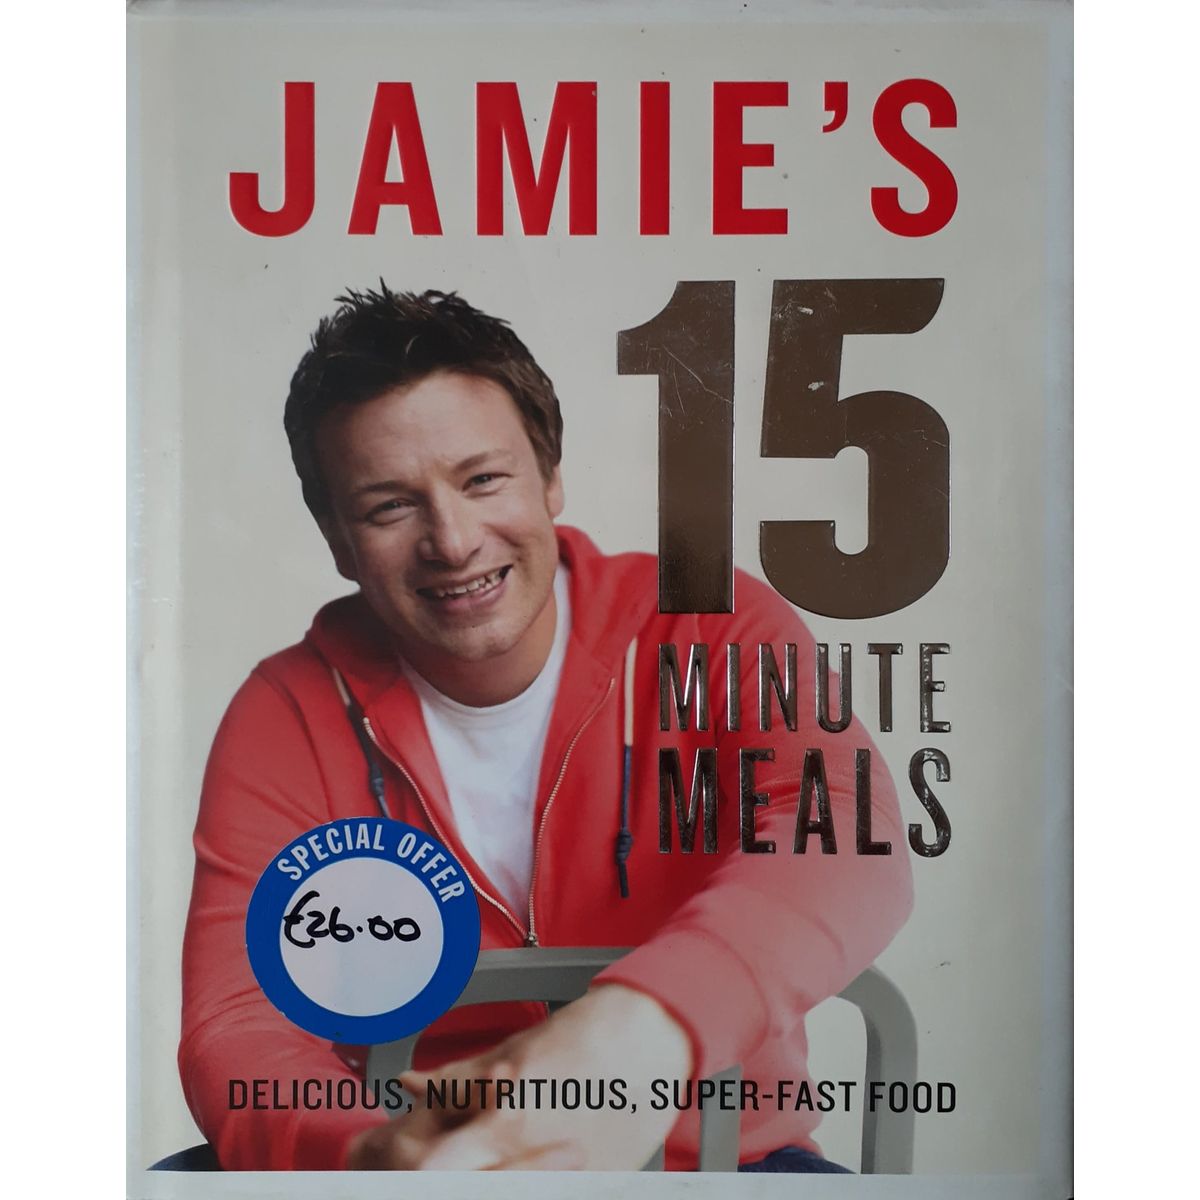 ISBN: 9780718157807 / 071815780X - Jamie's 15 Minute Meals by Jamie Oliver [2012]